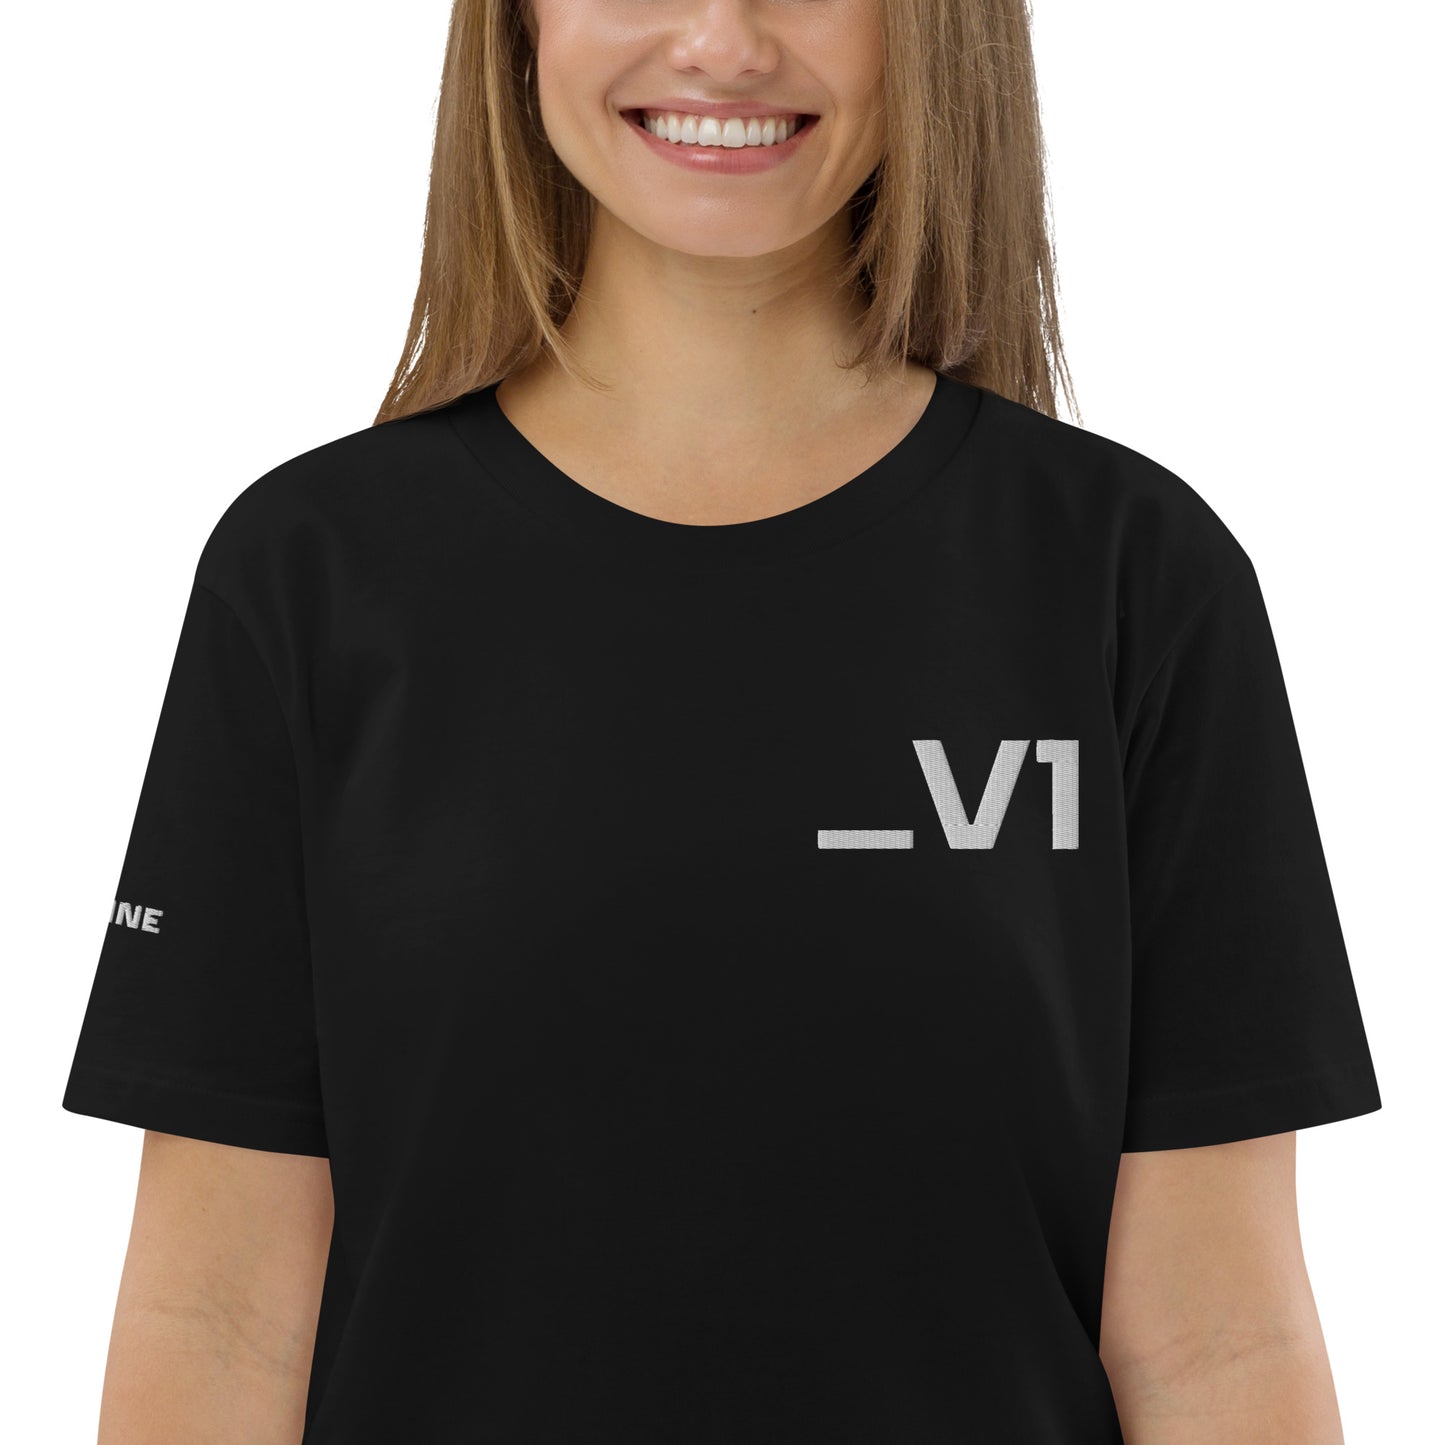 _V1 Embroidered Unisex organic cotton t-shirt